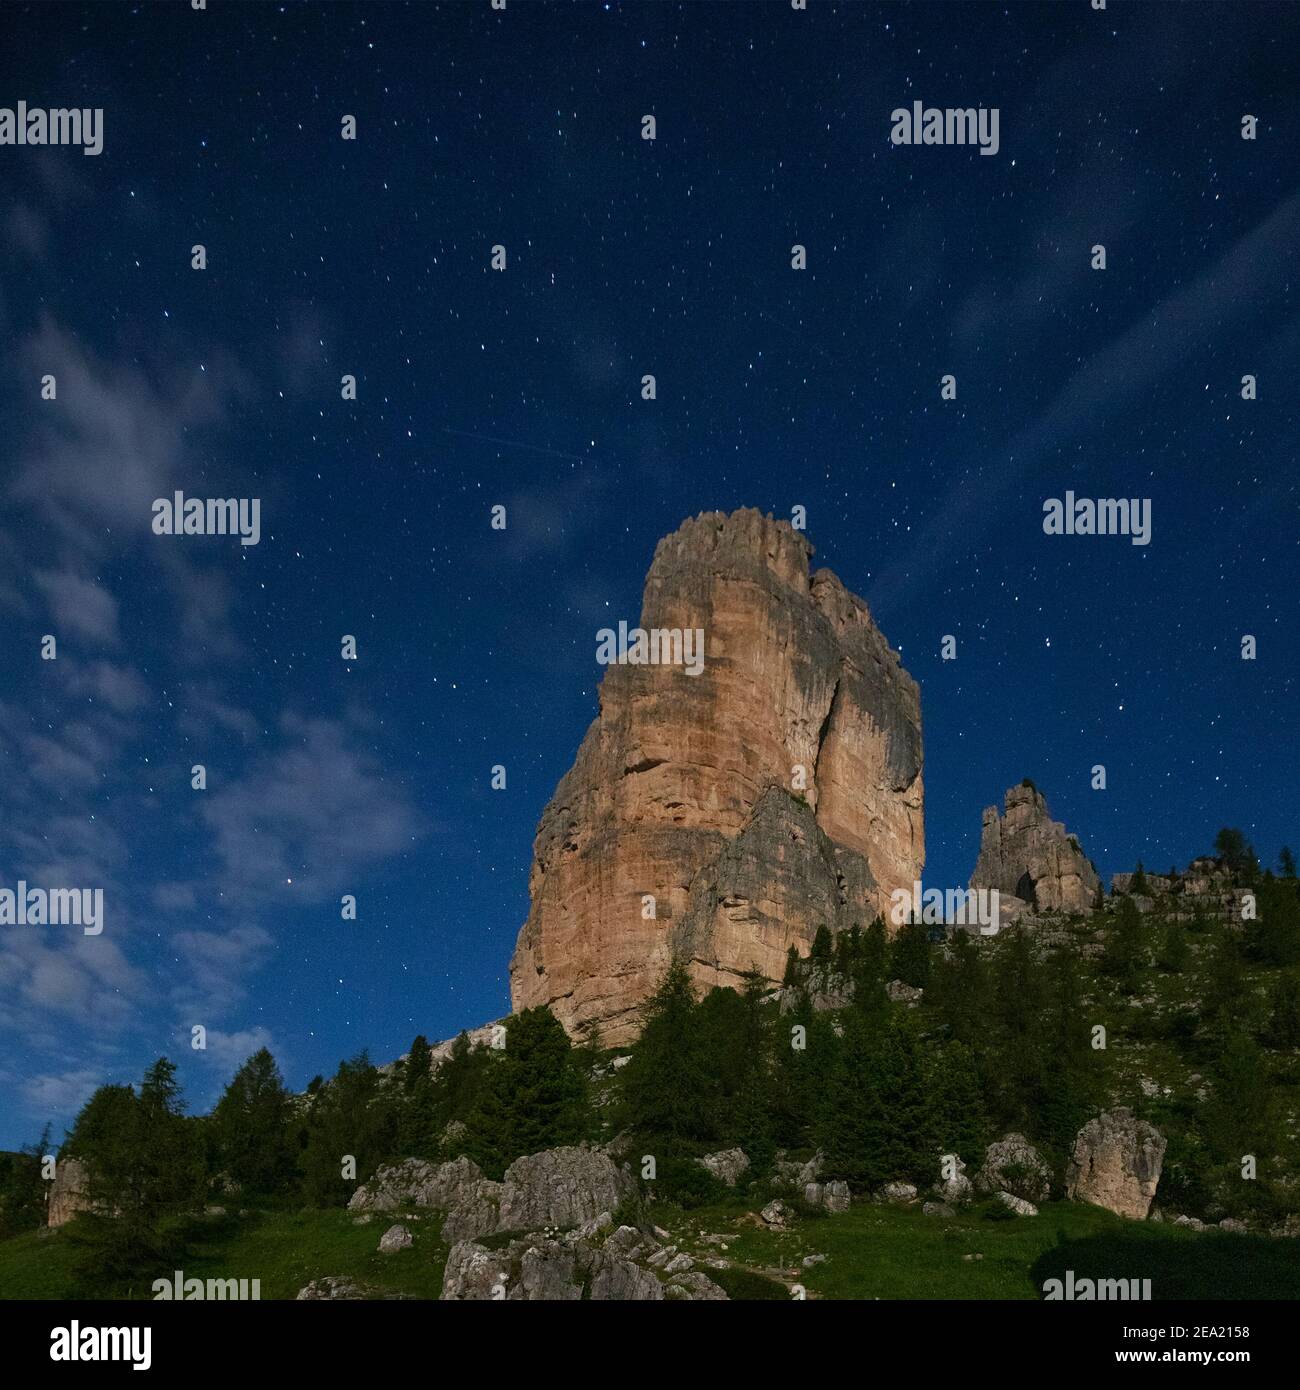 Night landscape and starry sky. Cinque Torri mountain peaks. The Ampezzo Dolomites. Italian Alps. Europe. Stock Photo